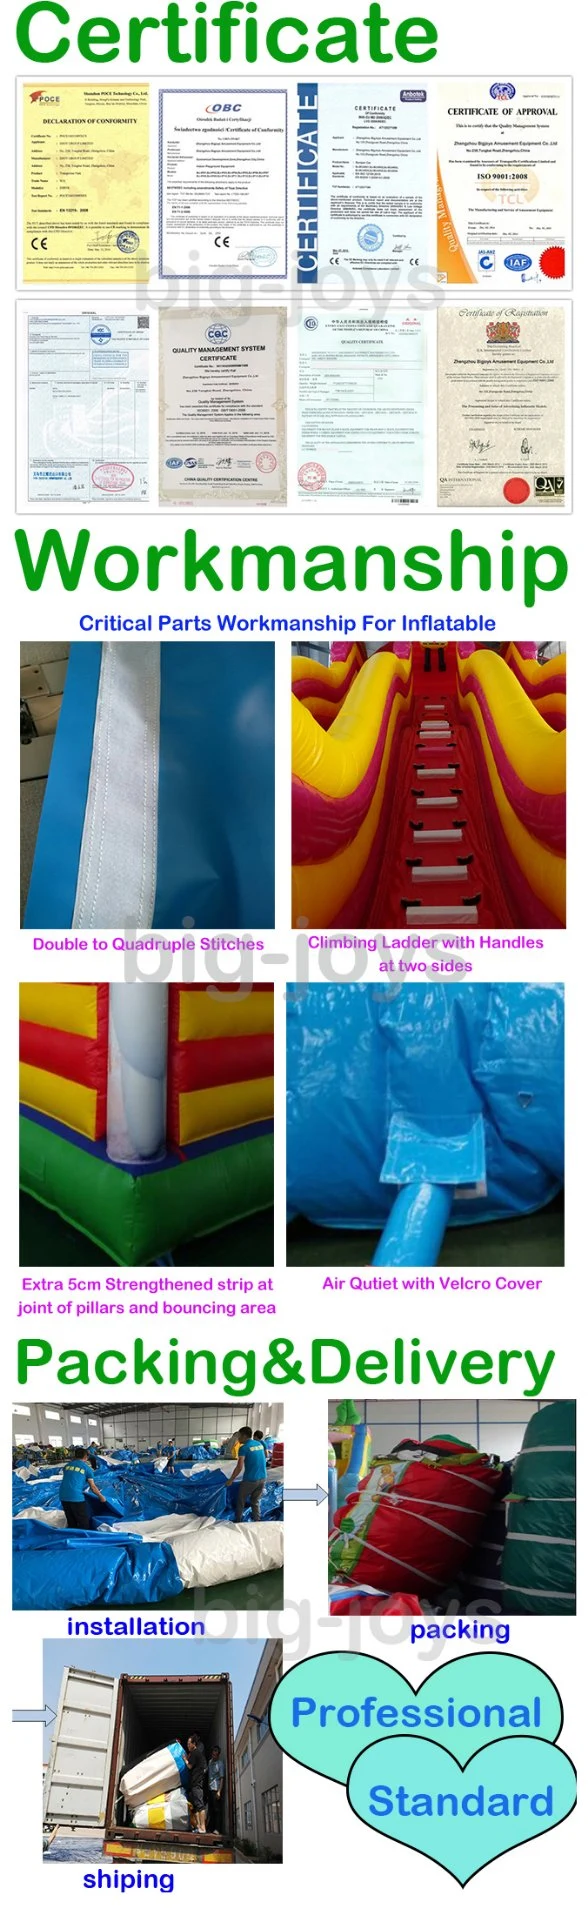 Commercial Inflatable Single Slide for Sale/ Inflatable Game Funcity for Sale/ Inflatable Slide for Kids